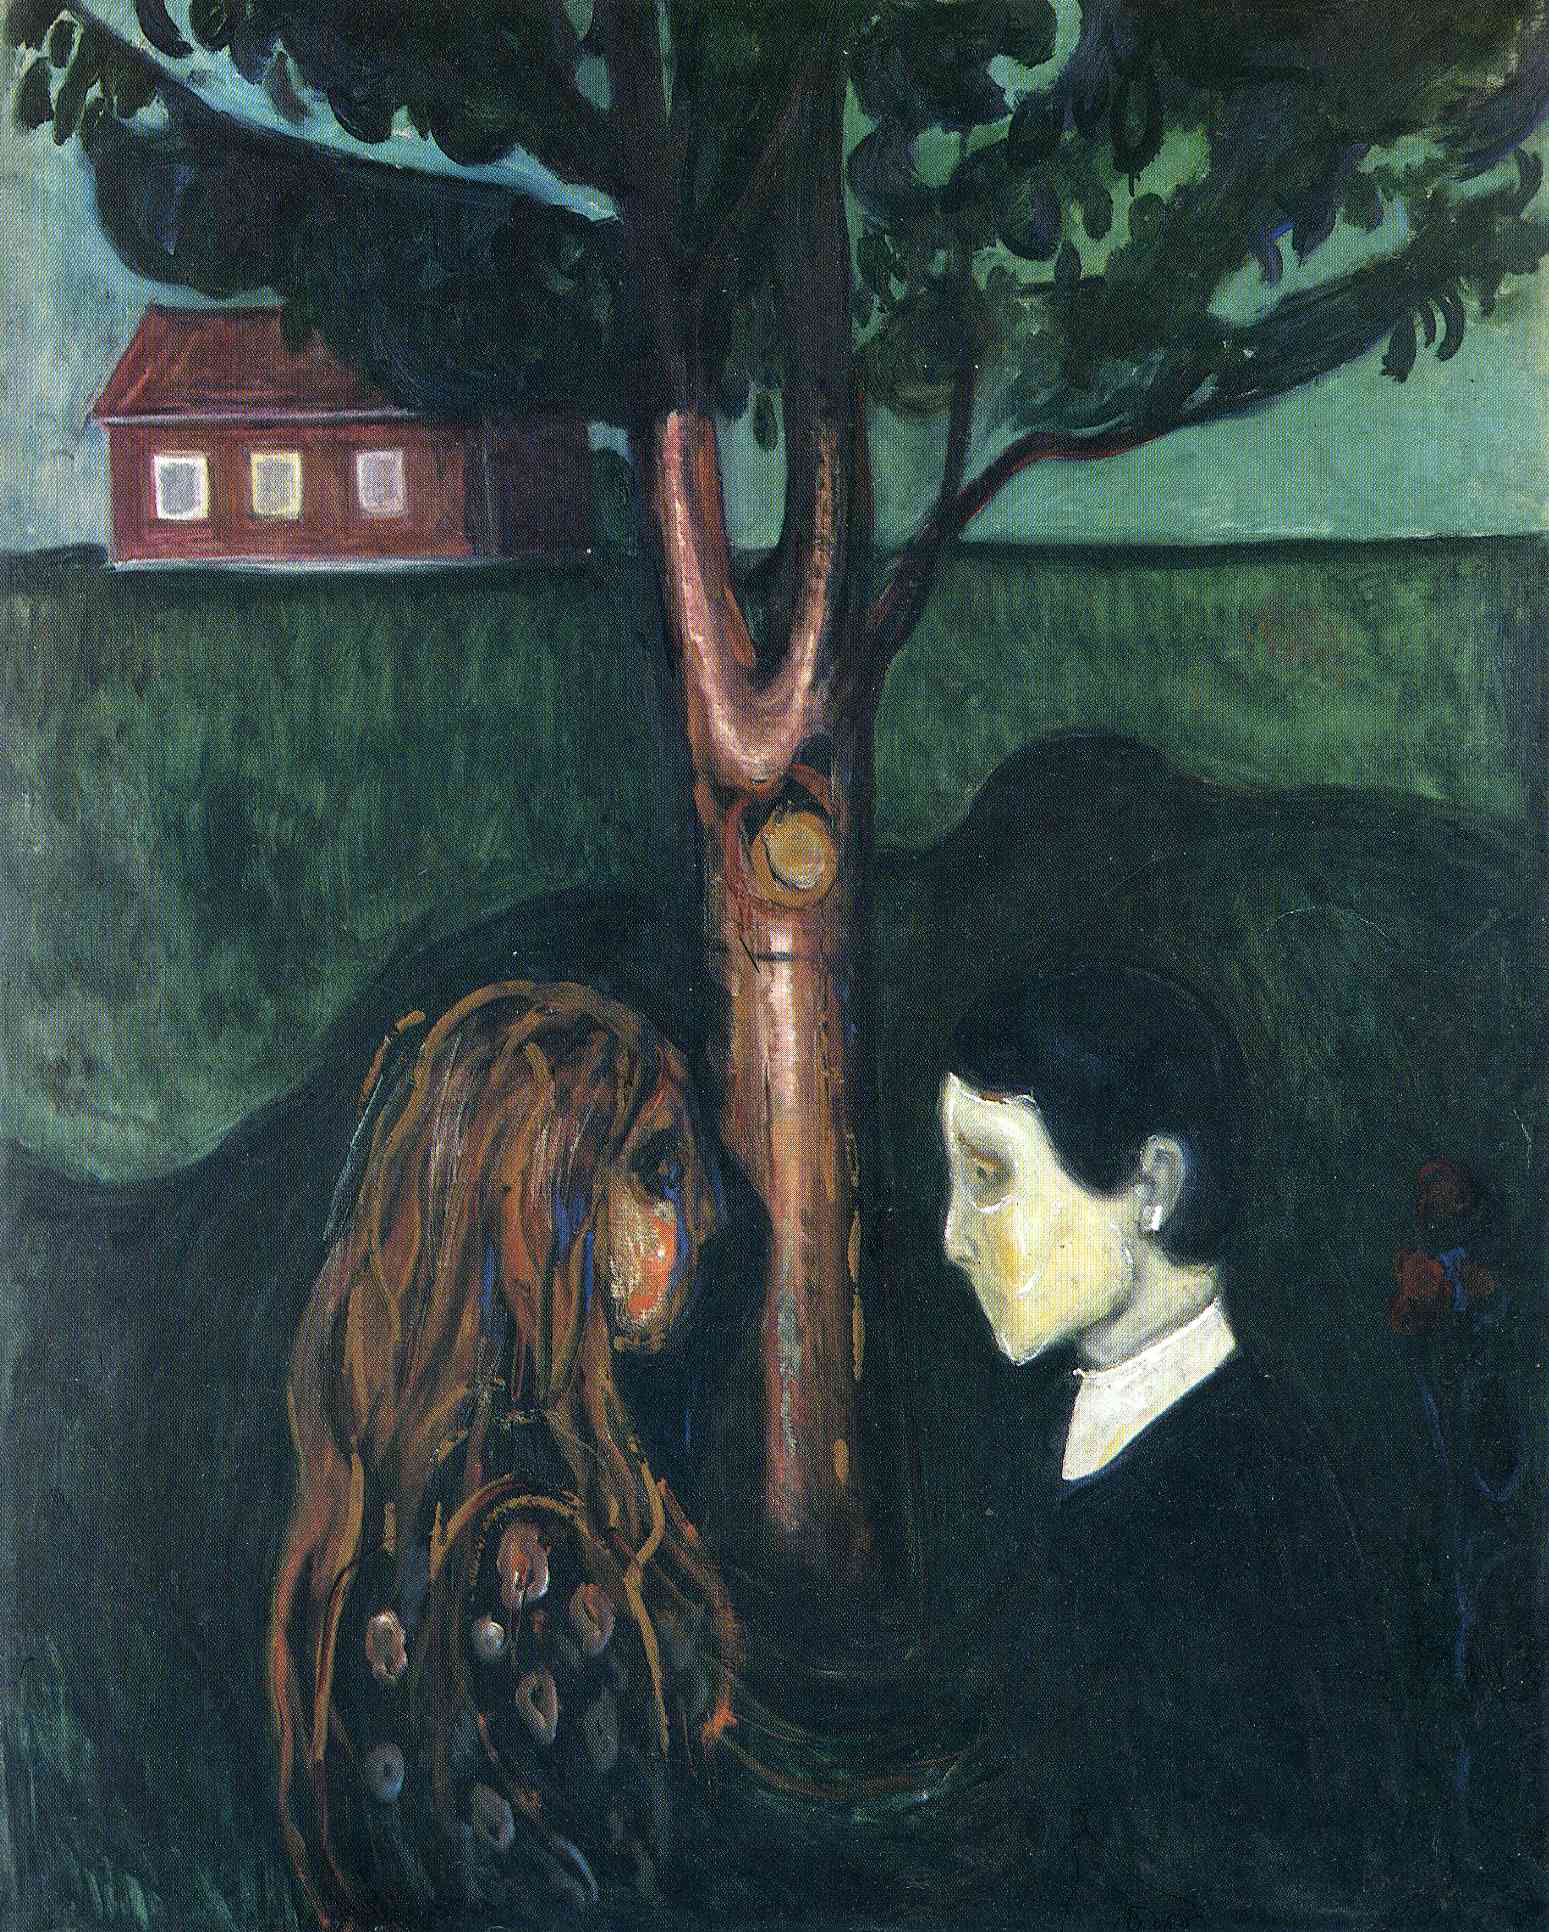 Olho no Olho by Edvard Munch - 1894 